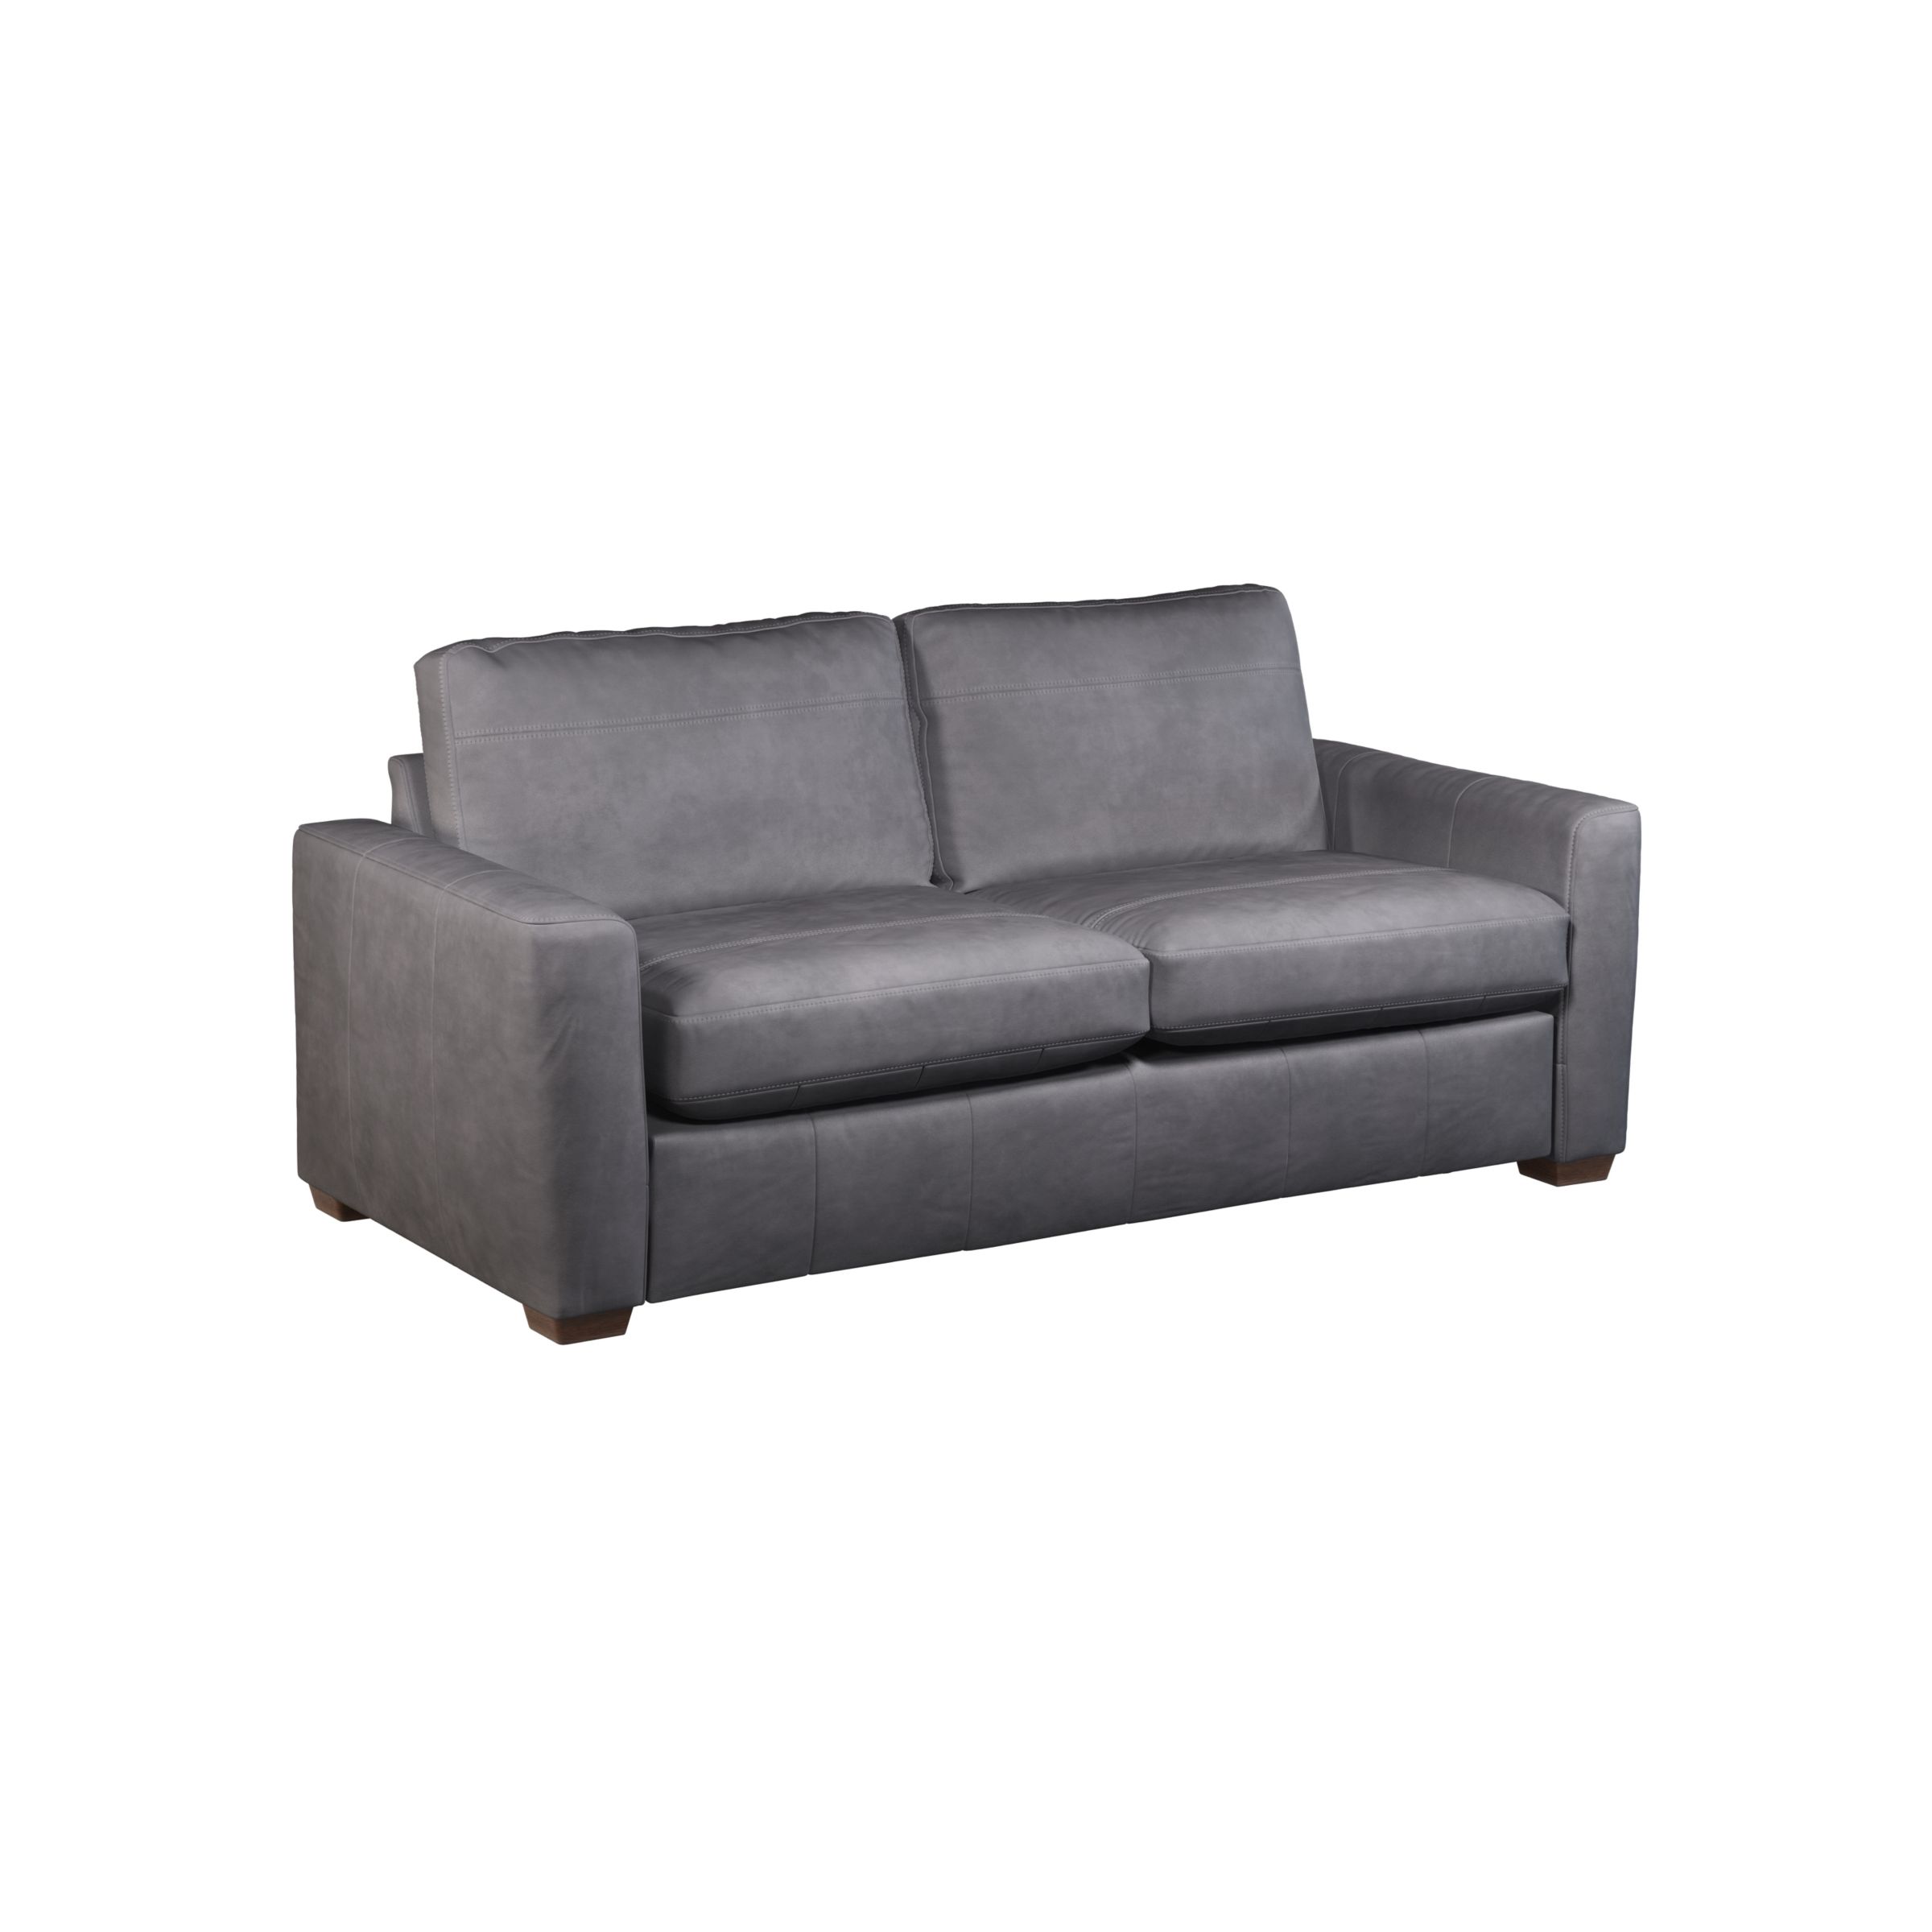 Oliver Range, John Lewis Oliver Large 3 Seater Leather Sofa, Dark Leg, Soft Touch Grey